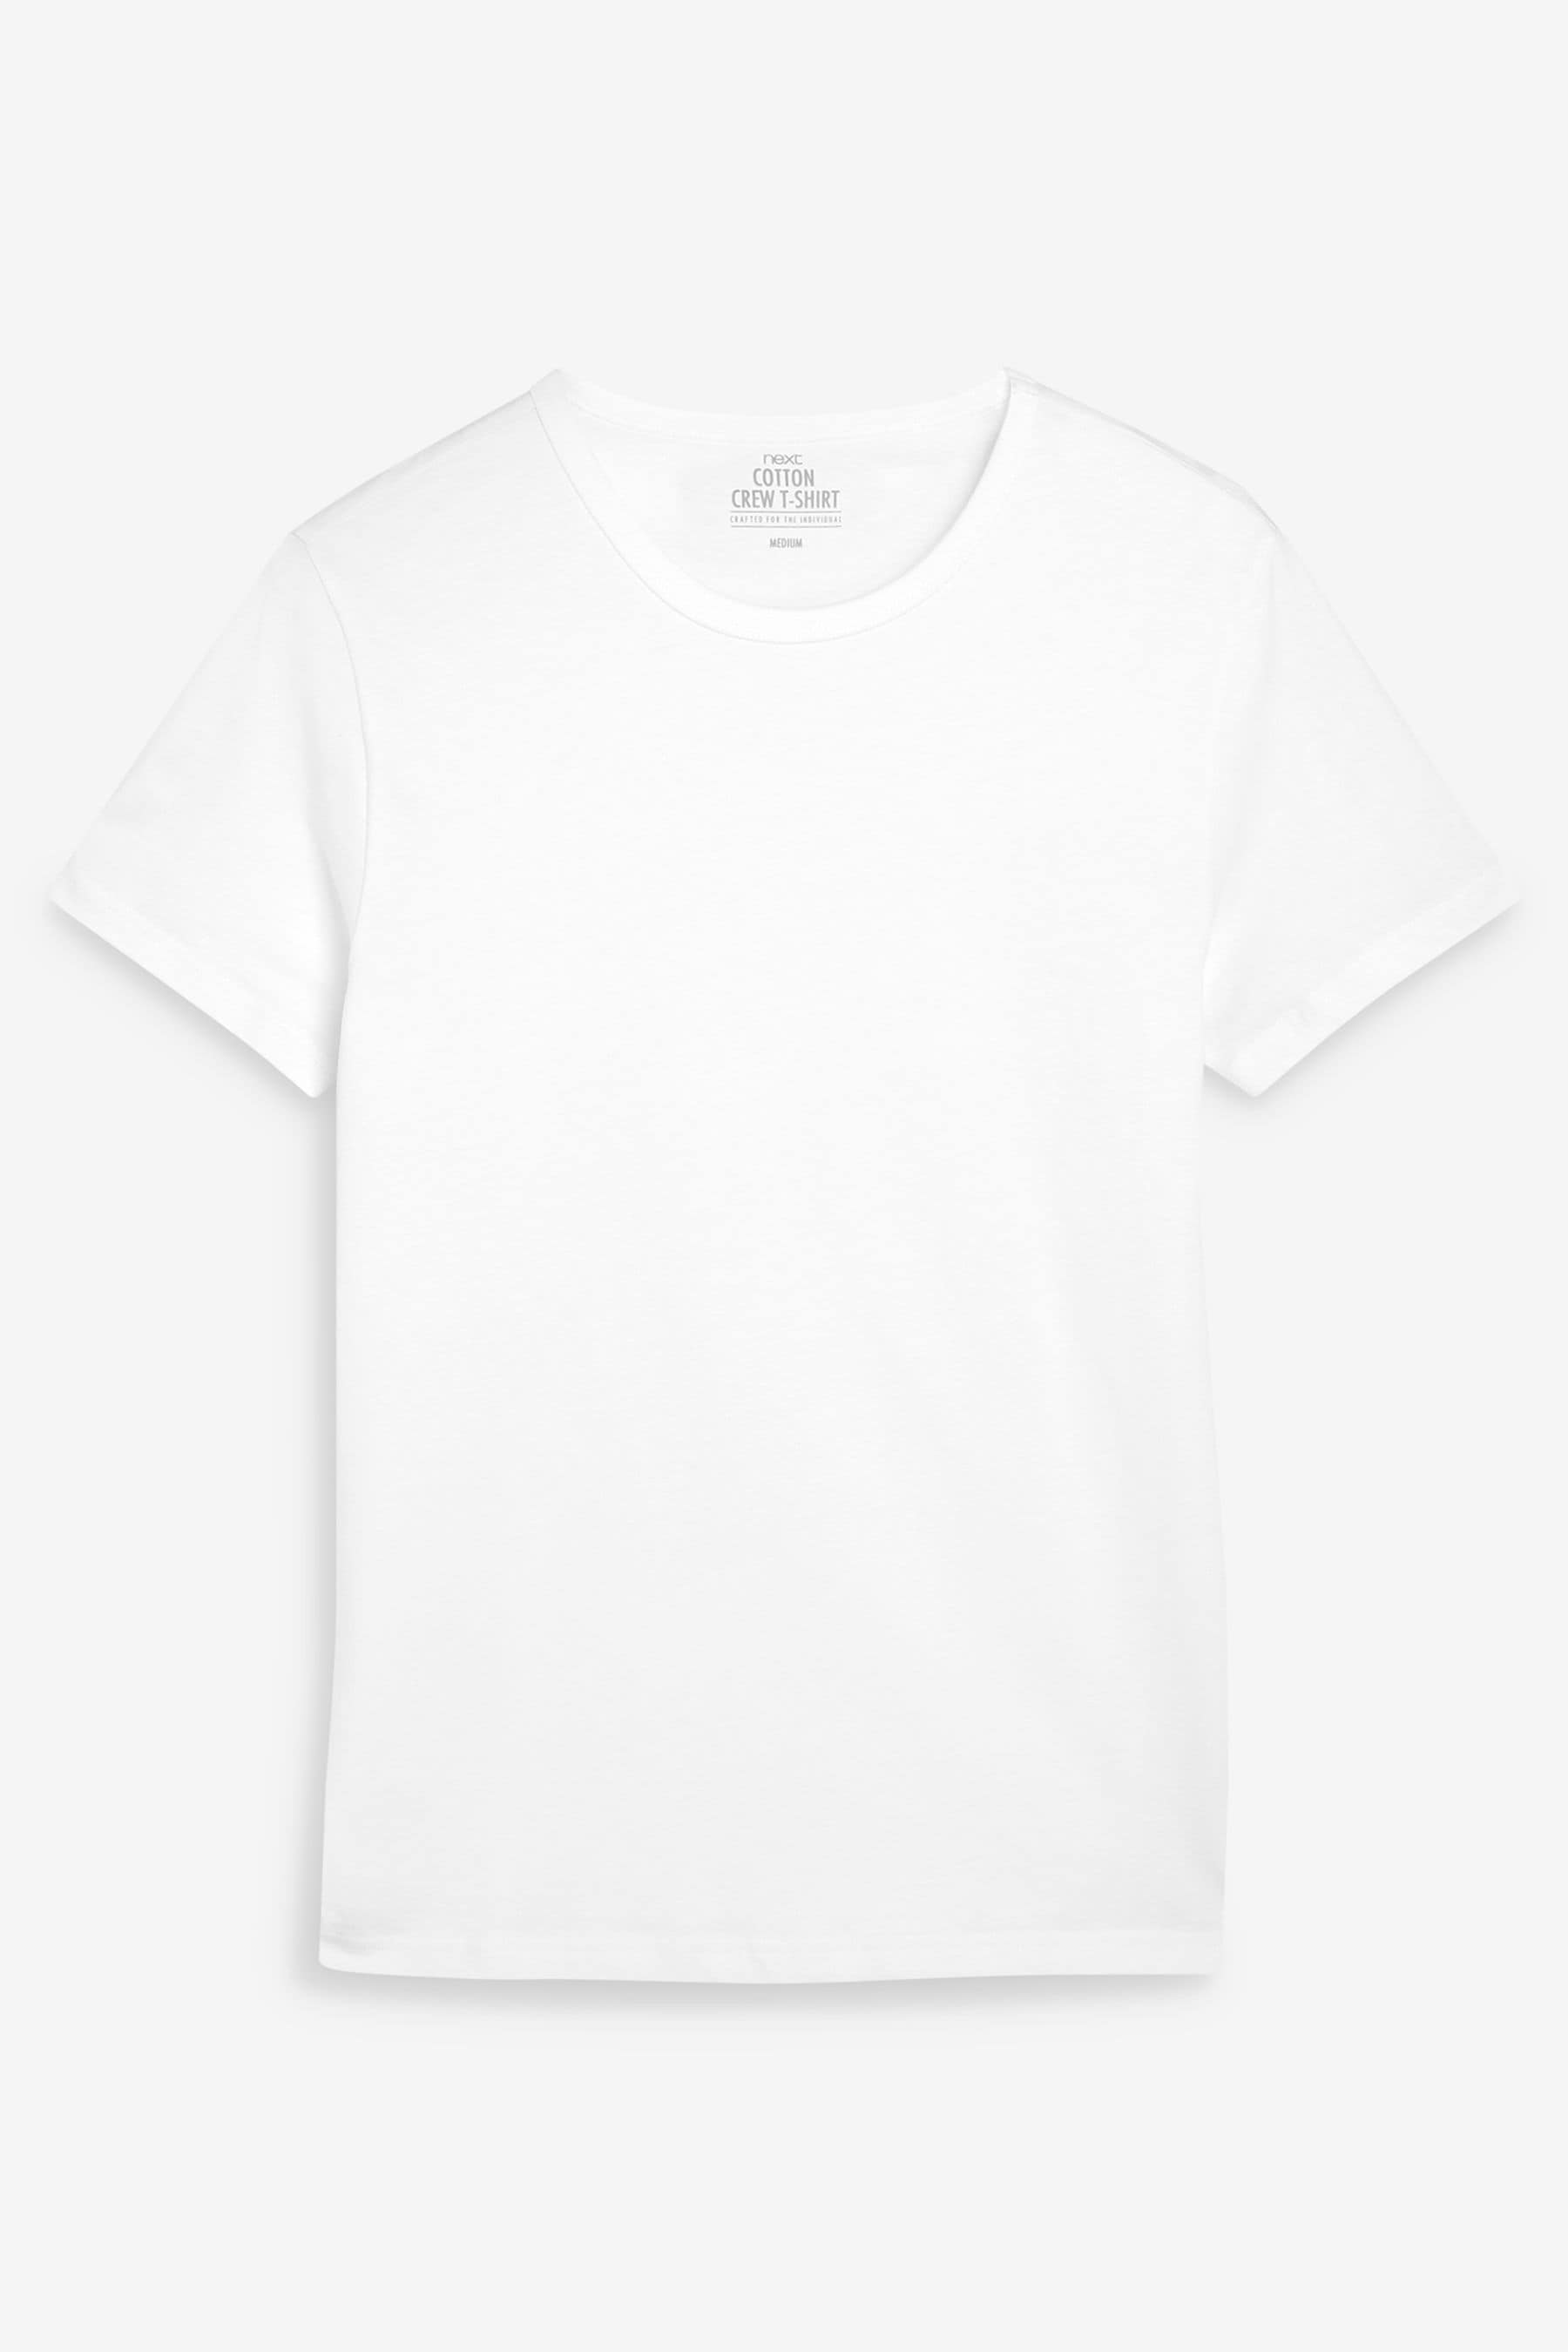 Buy Navy Blue/Blue/White/Grey Marl/Blue Marl Slim Slim Fit T-Shirts 5 ...